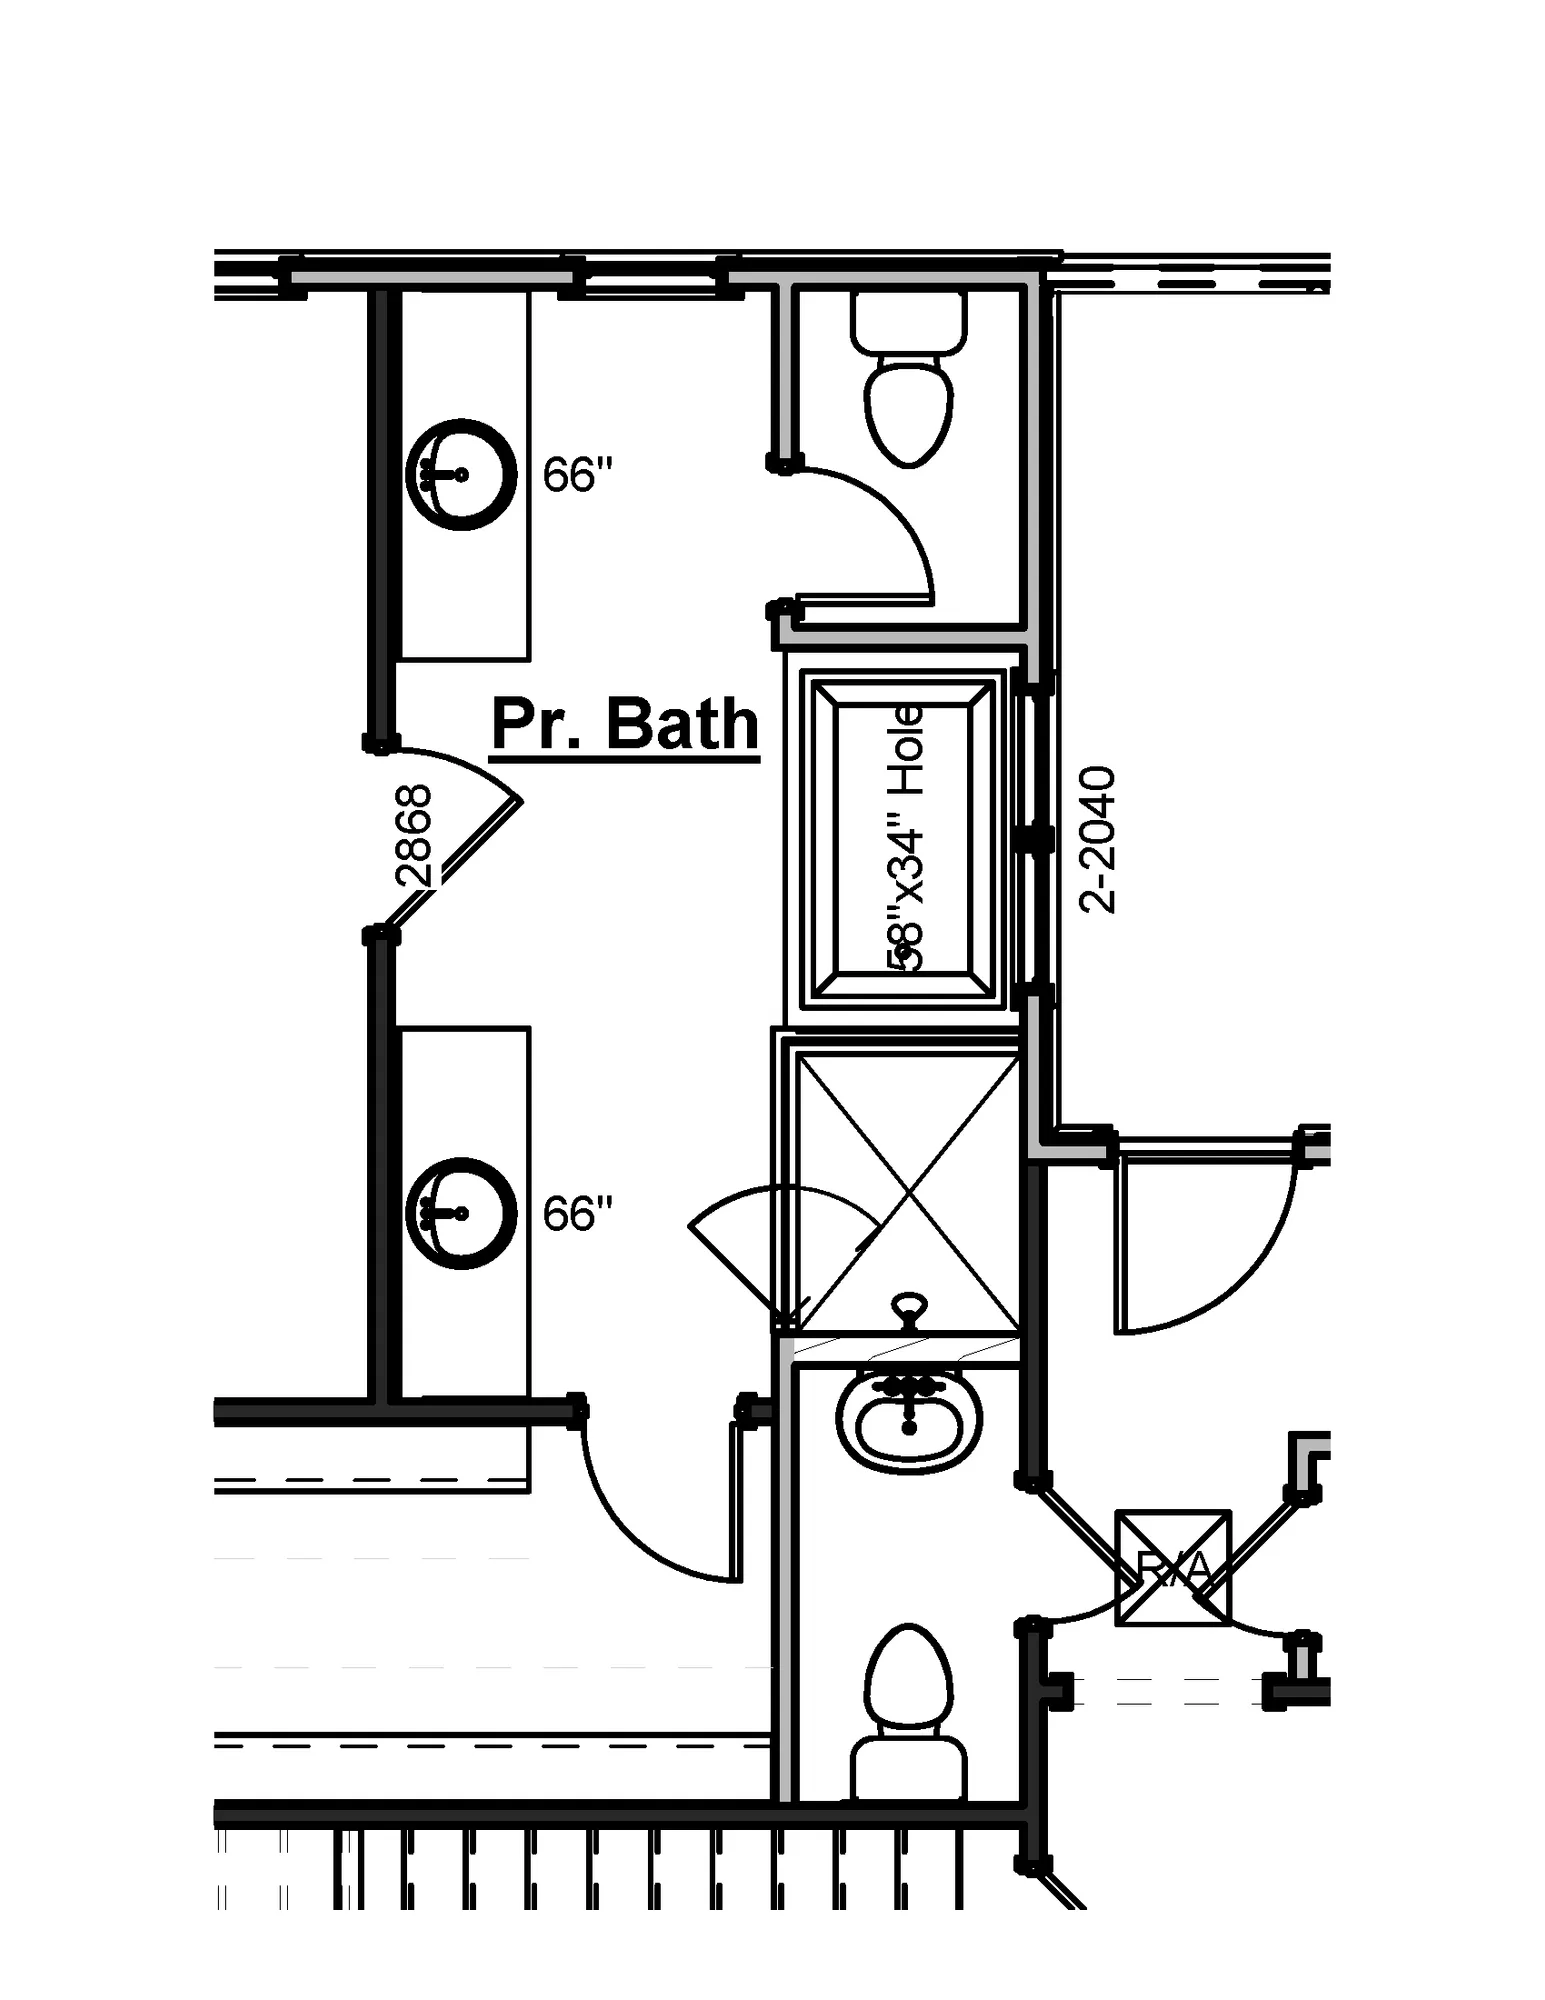 Primary Bath-Tub Option - undefined